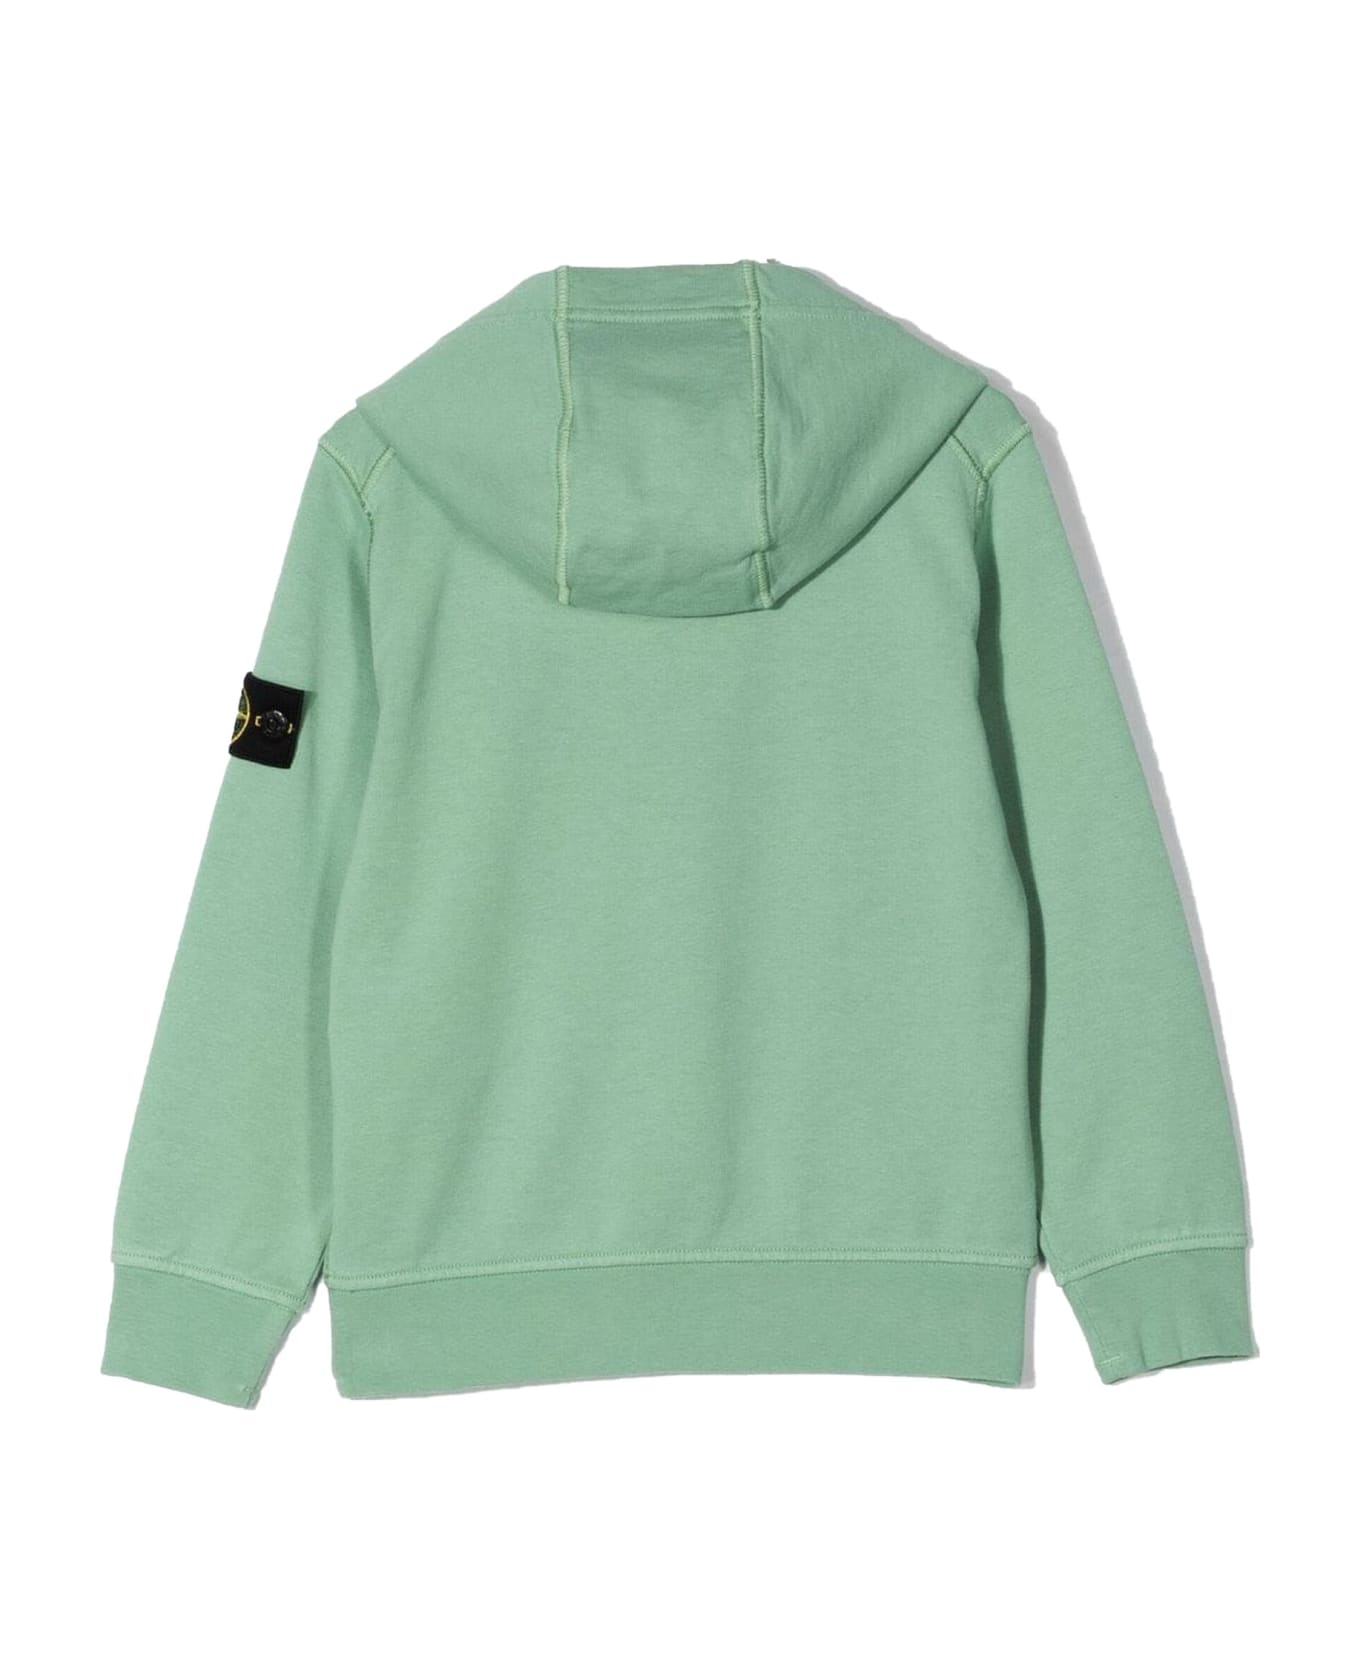 Stone Island Green Cotton Sweatshirt - Verde